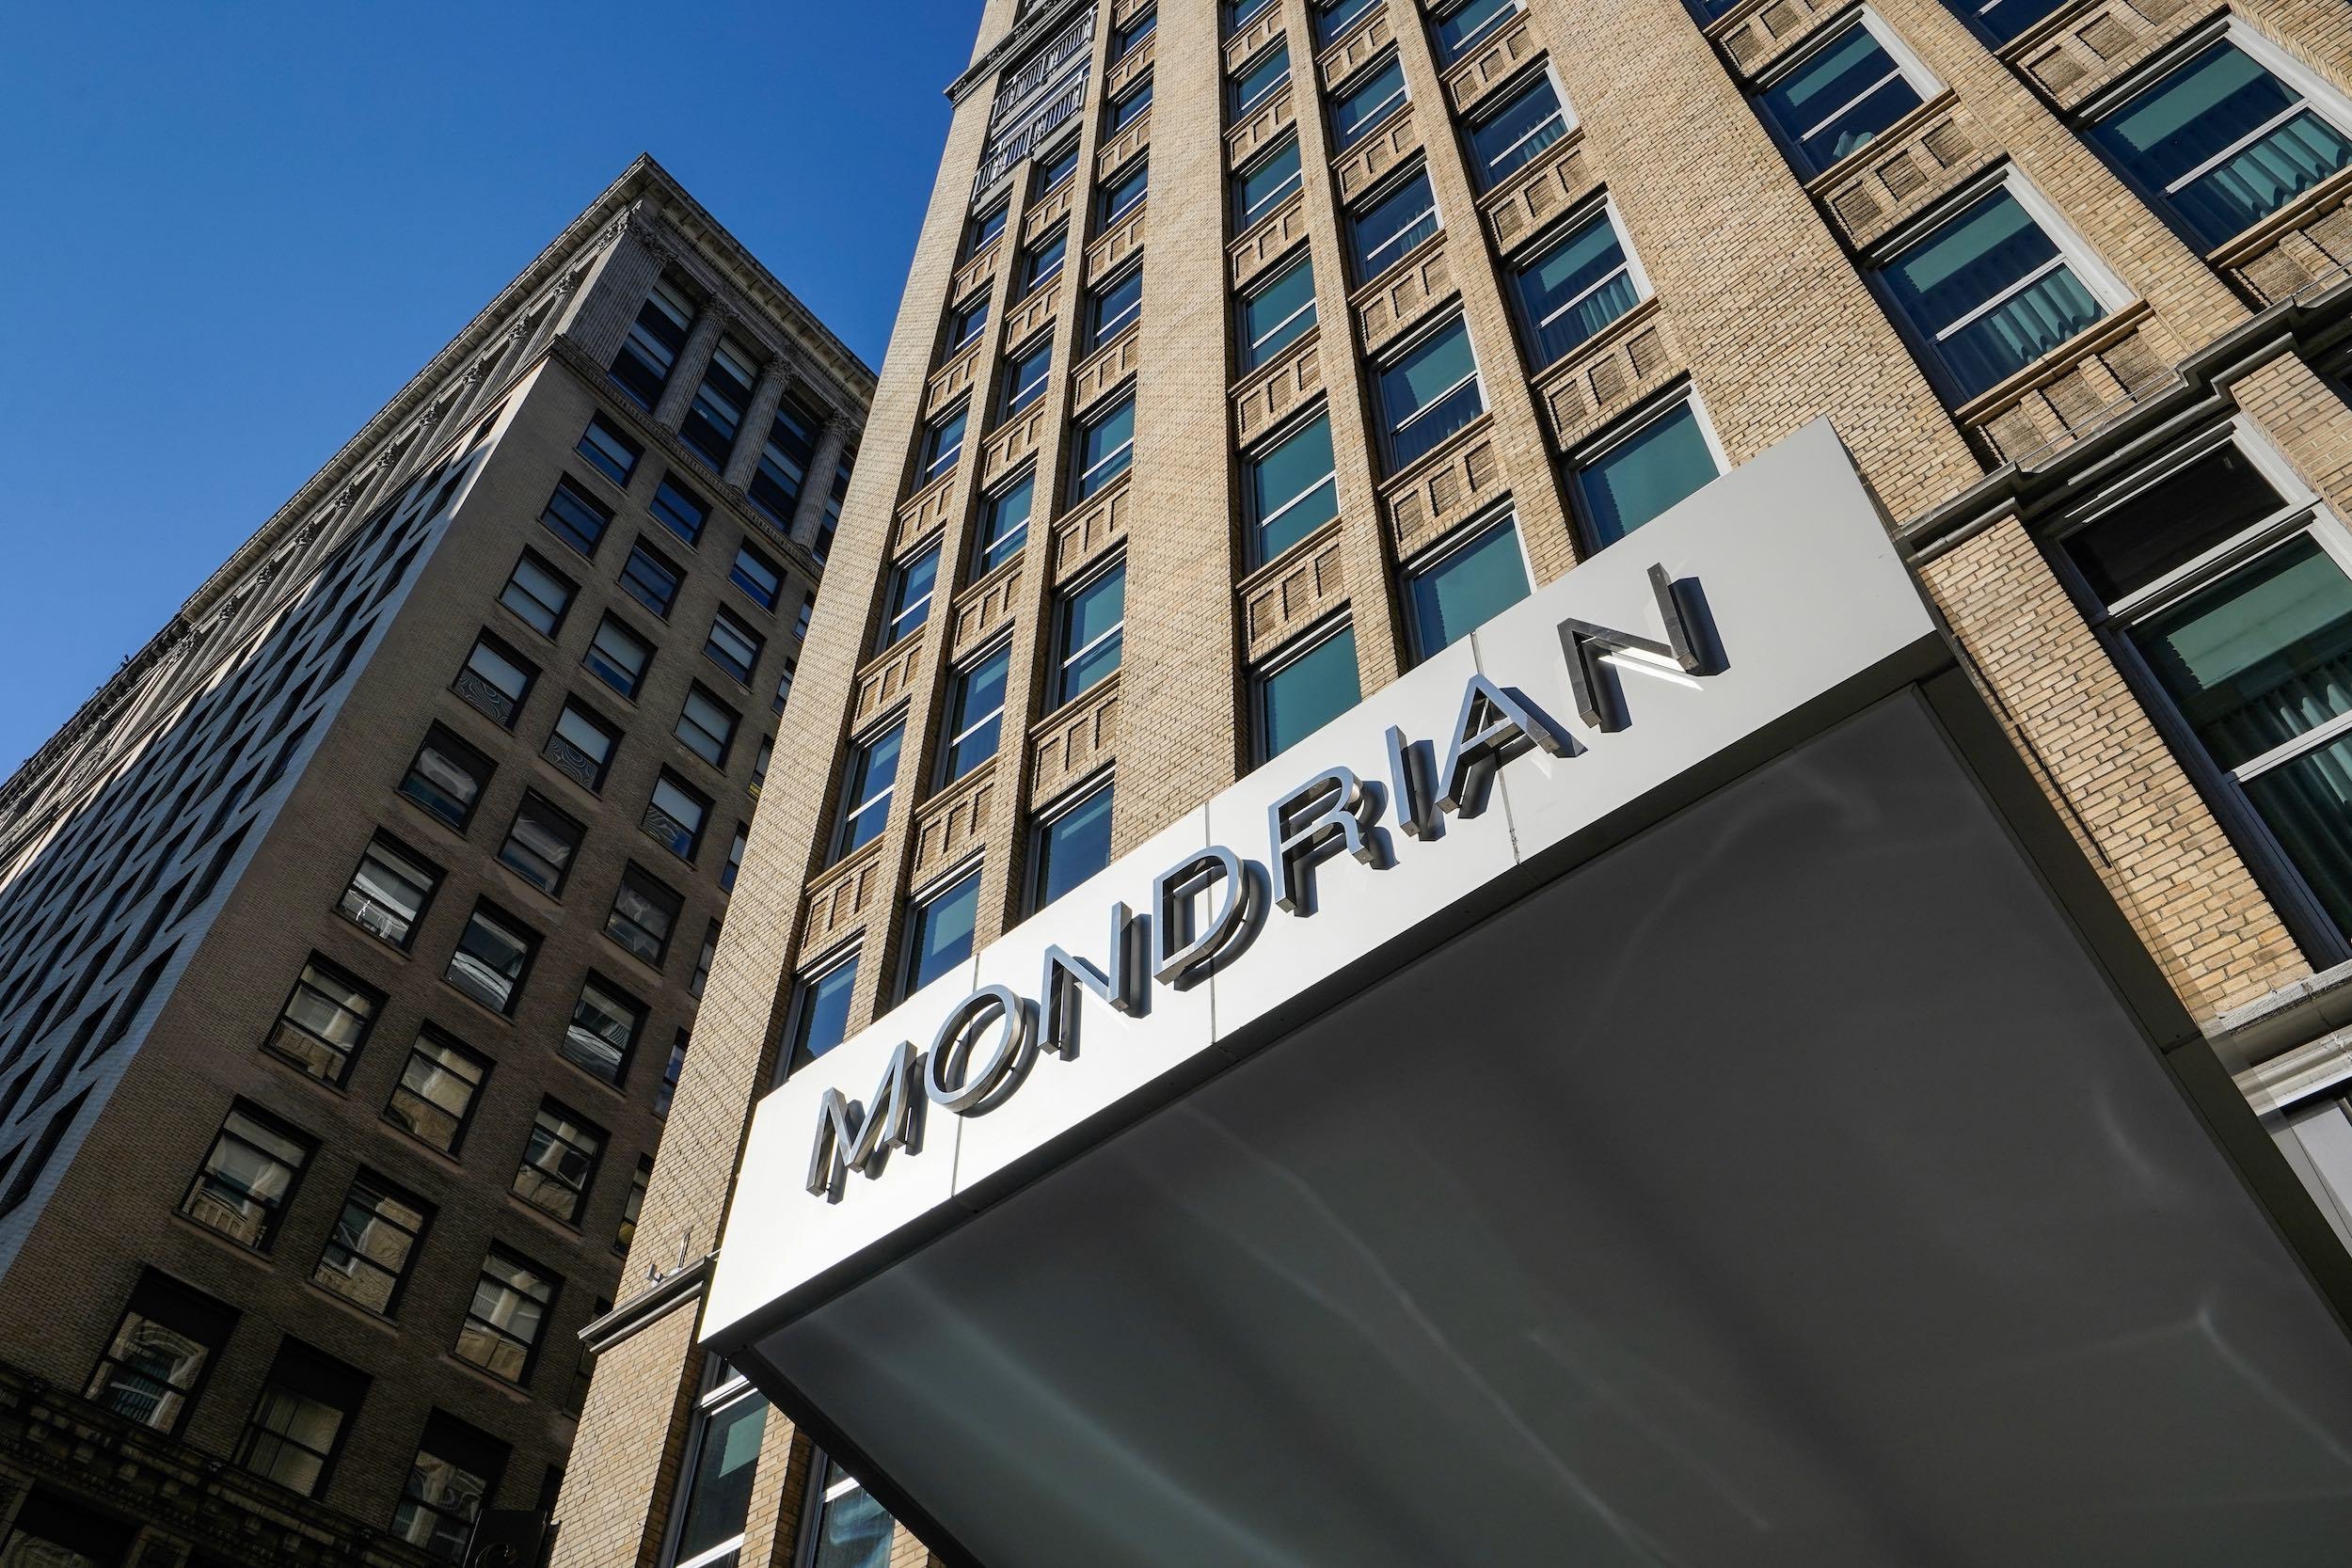 Mondrian Park Avenue 호텔 건물 및 표지판 외부